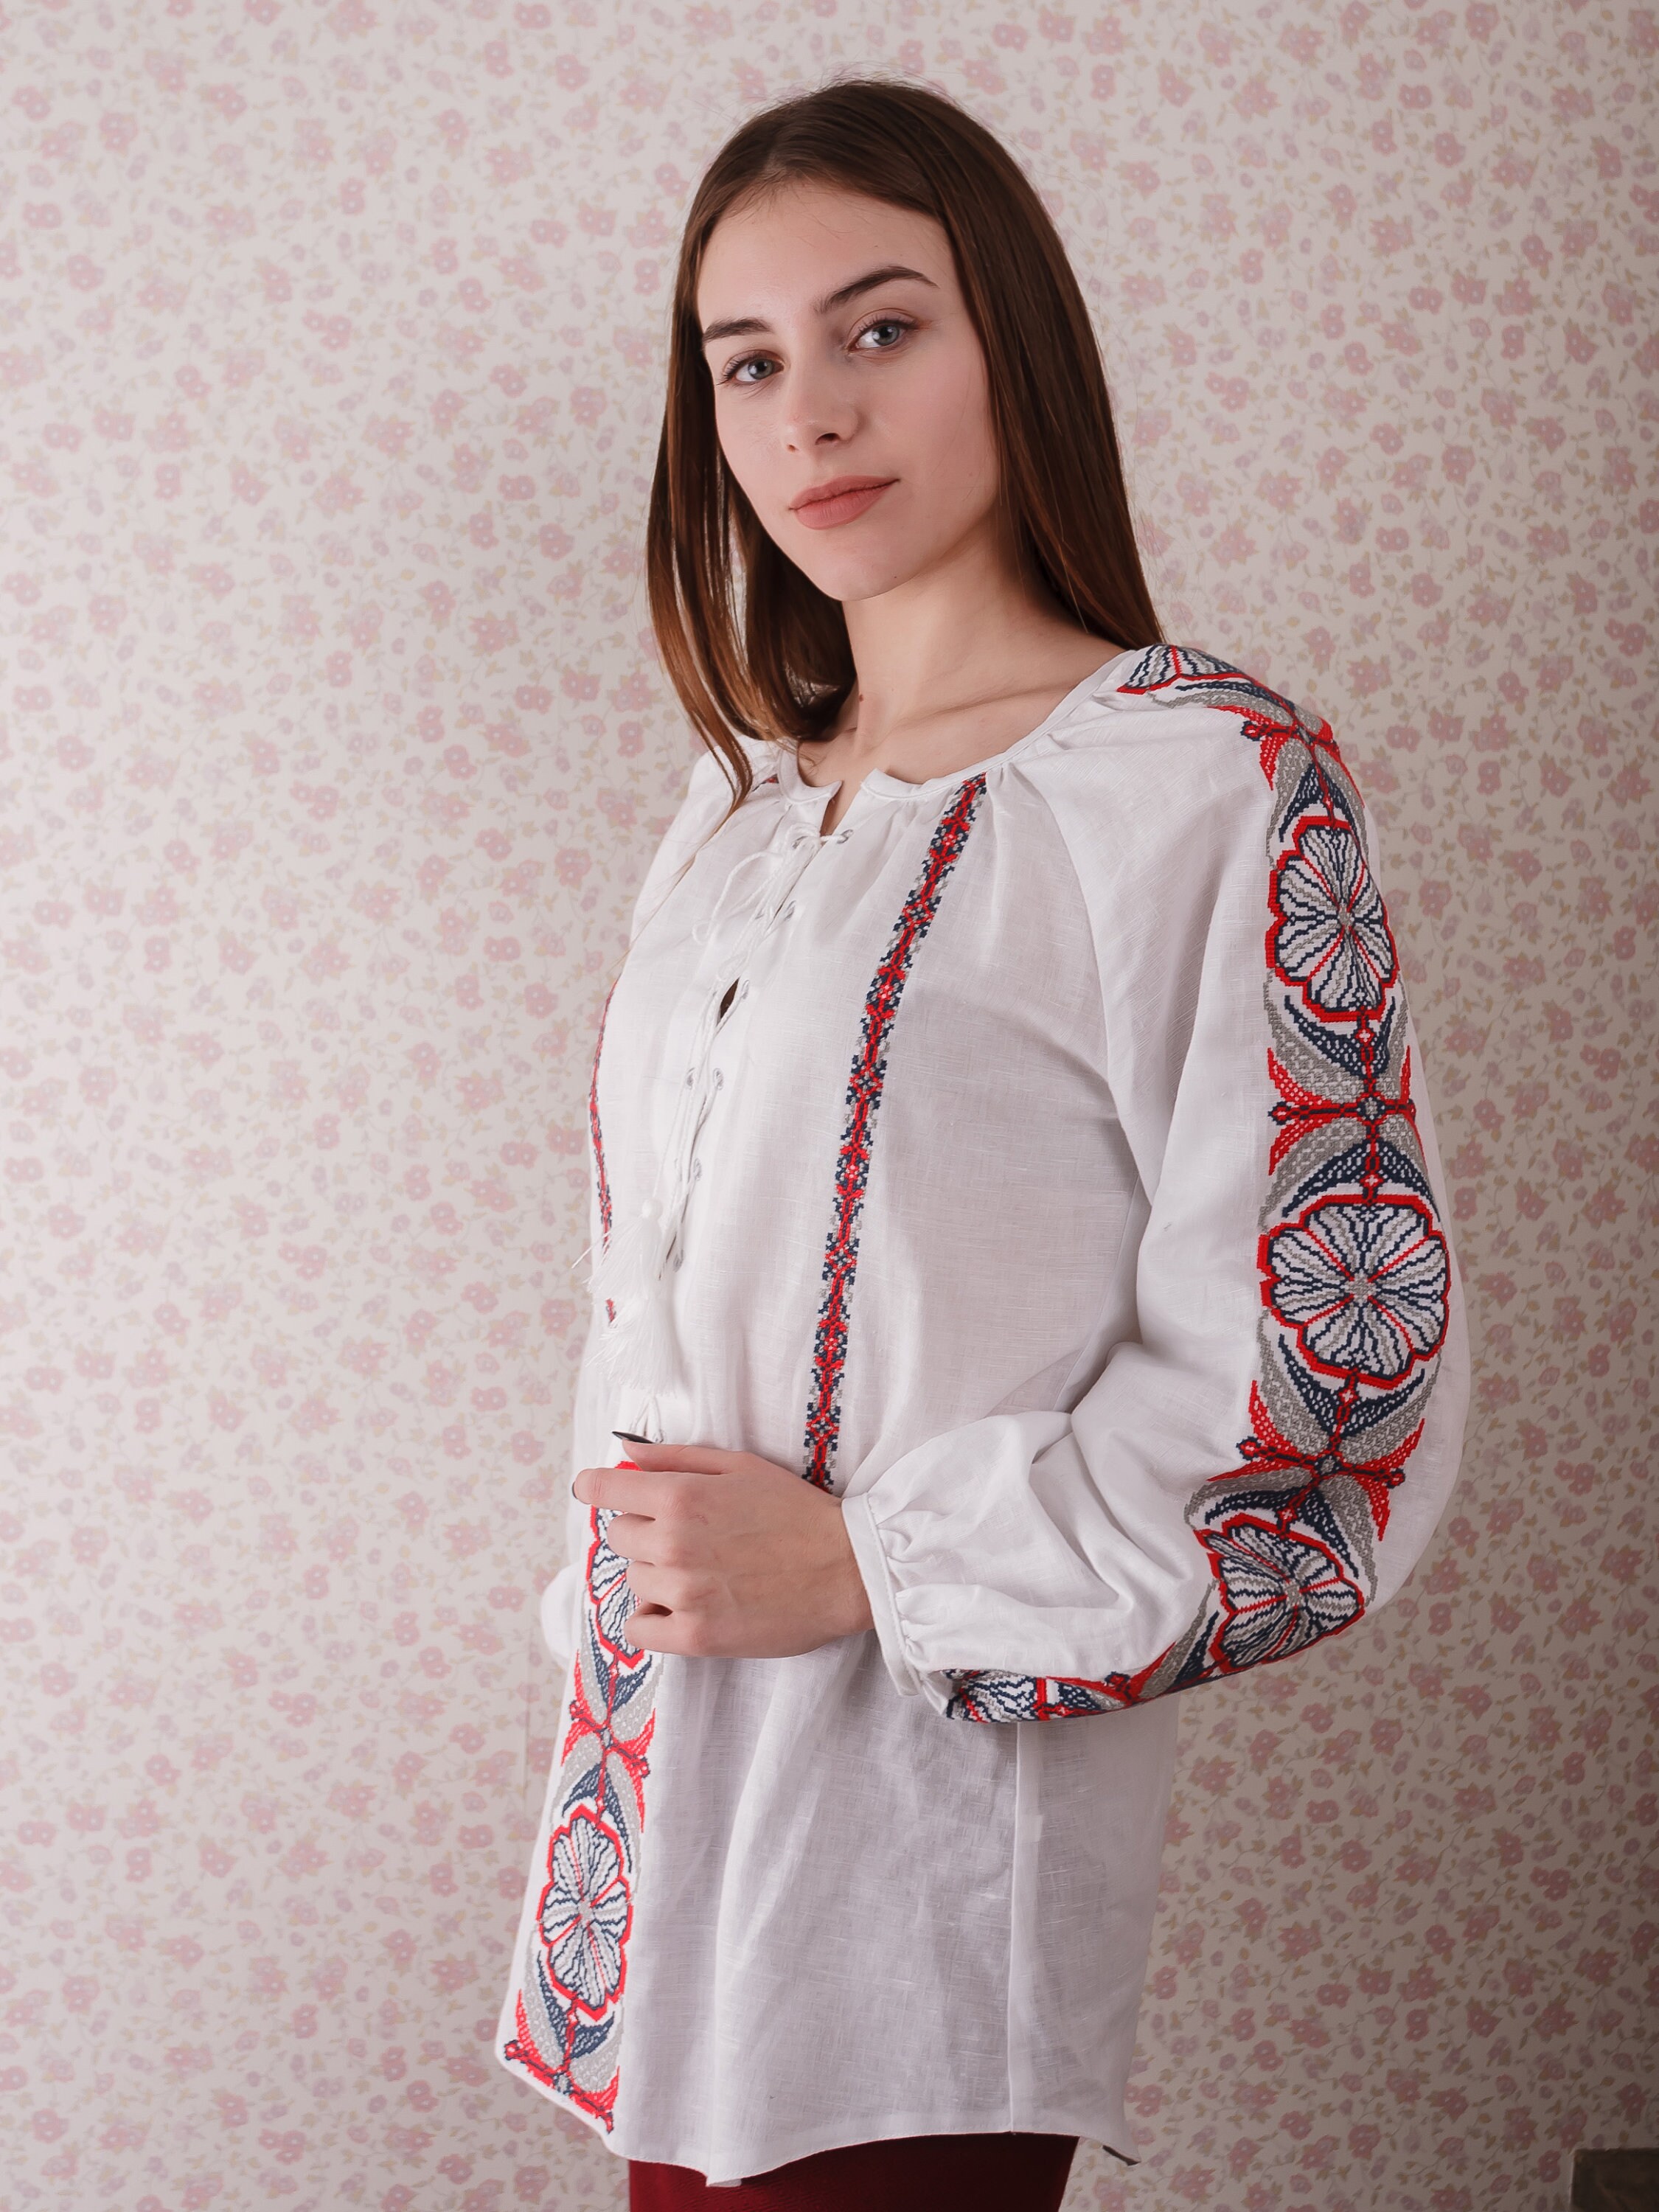 Women vyshyvanka. Traditional Ukrainian embroidered | Etsy